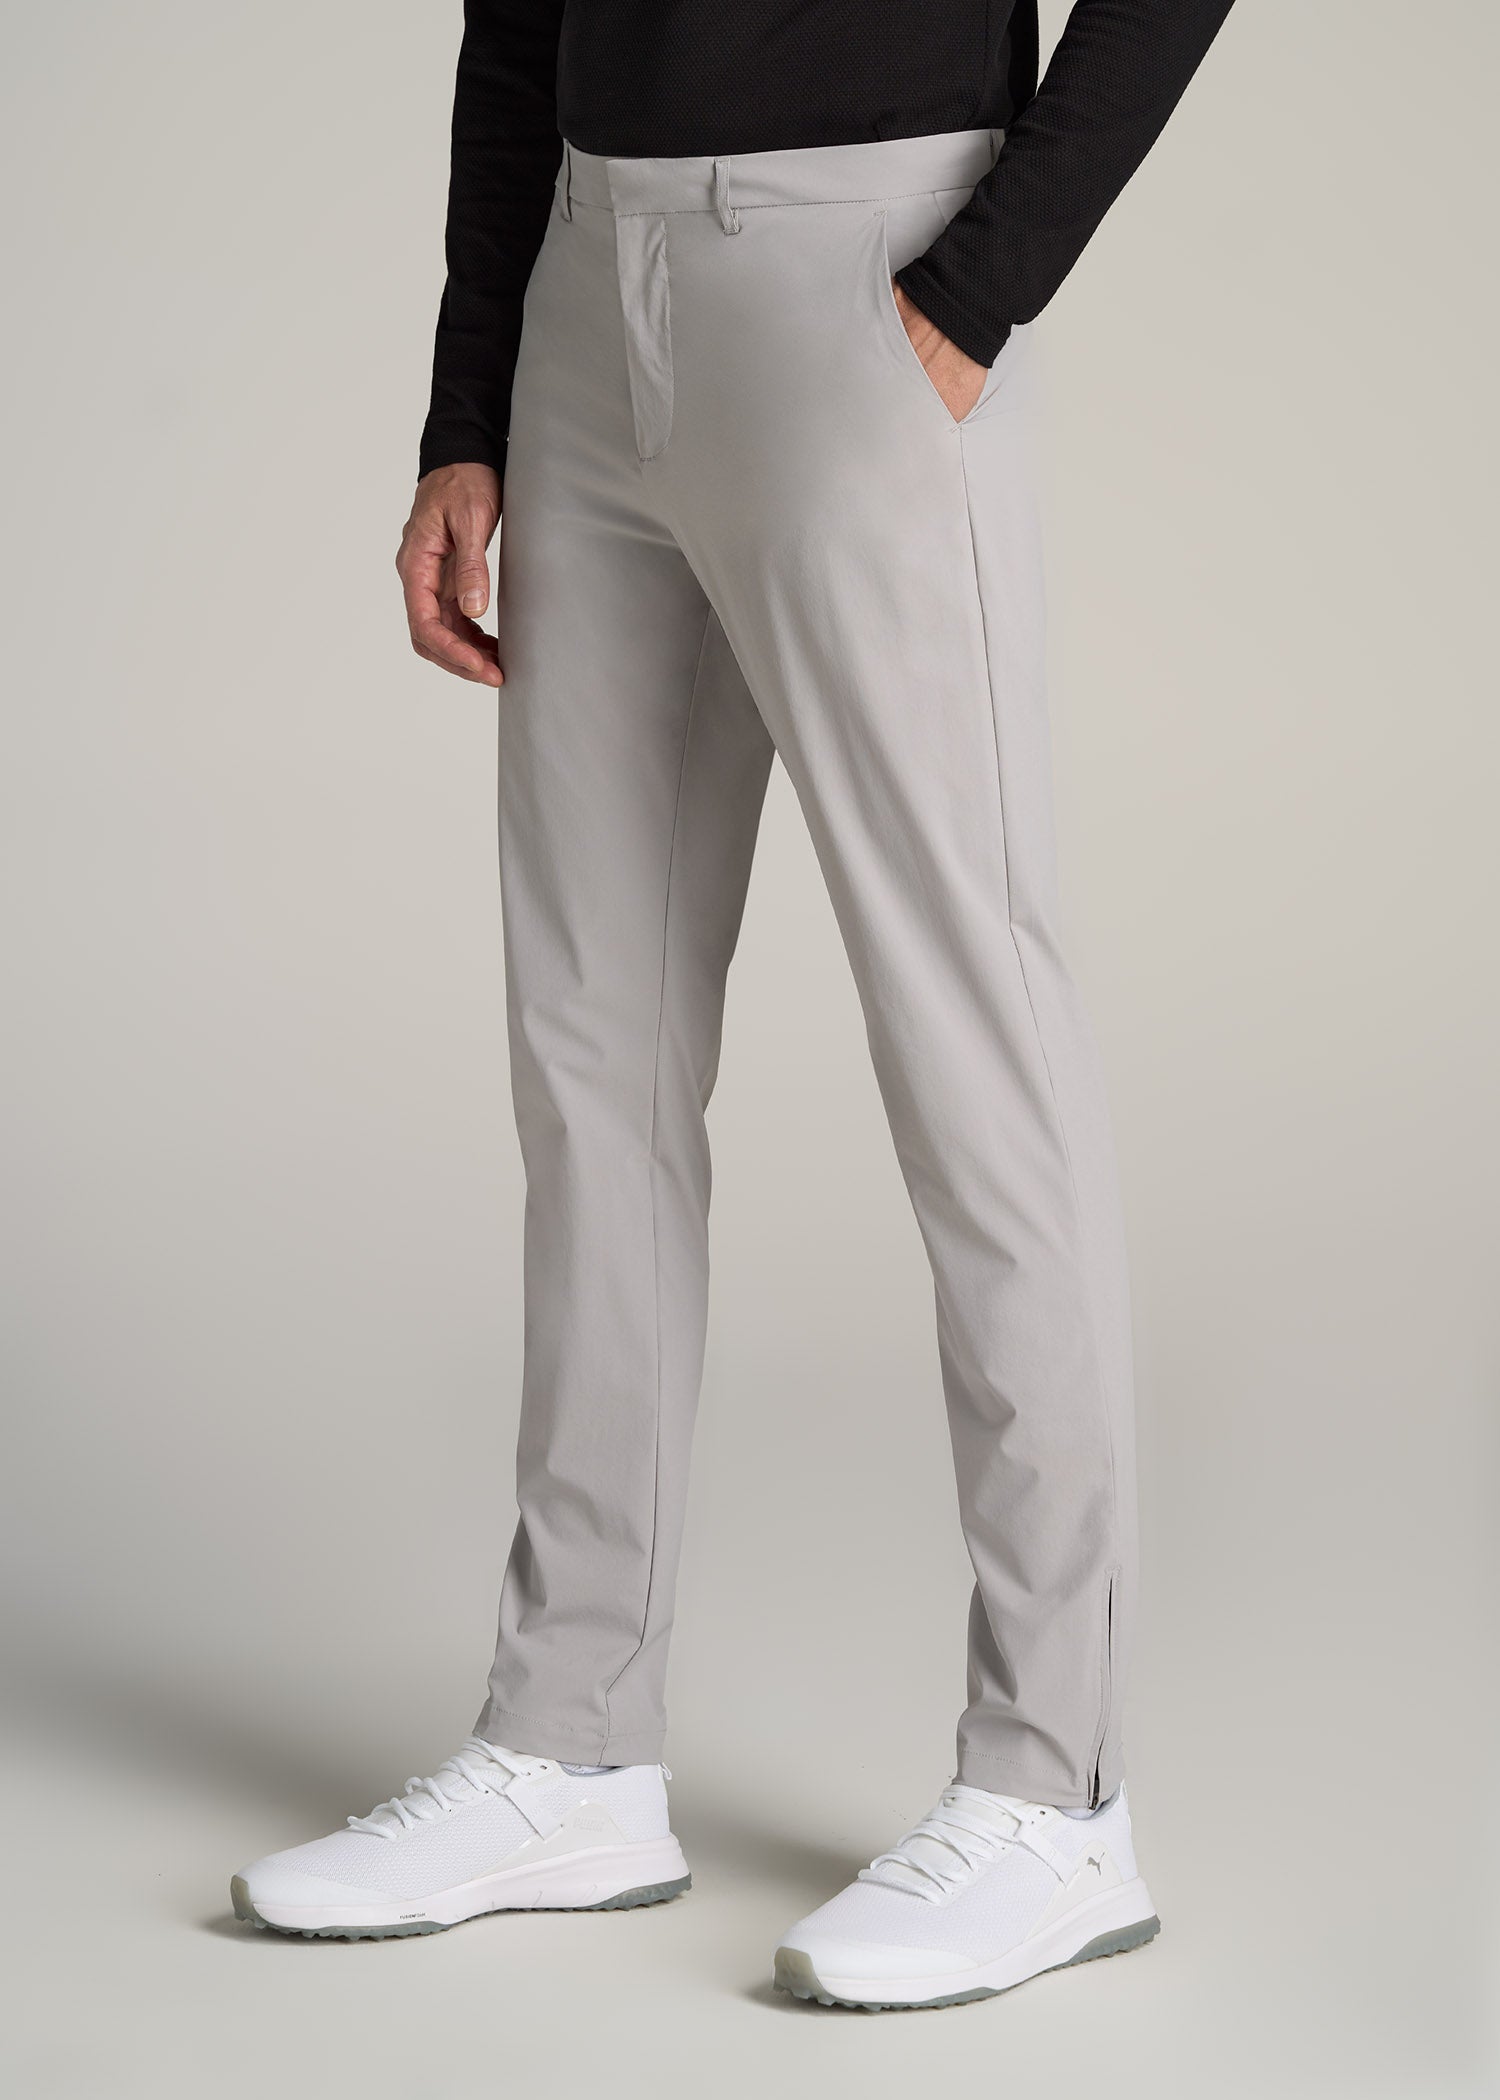 Men's Pants - Grey - 36